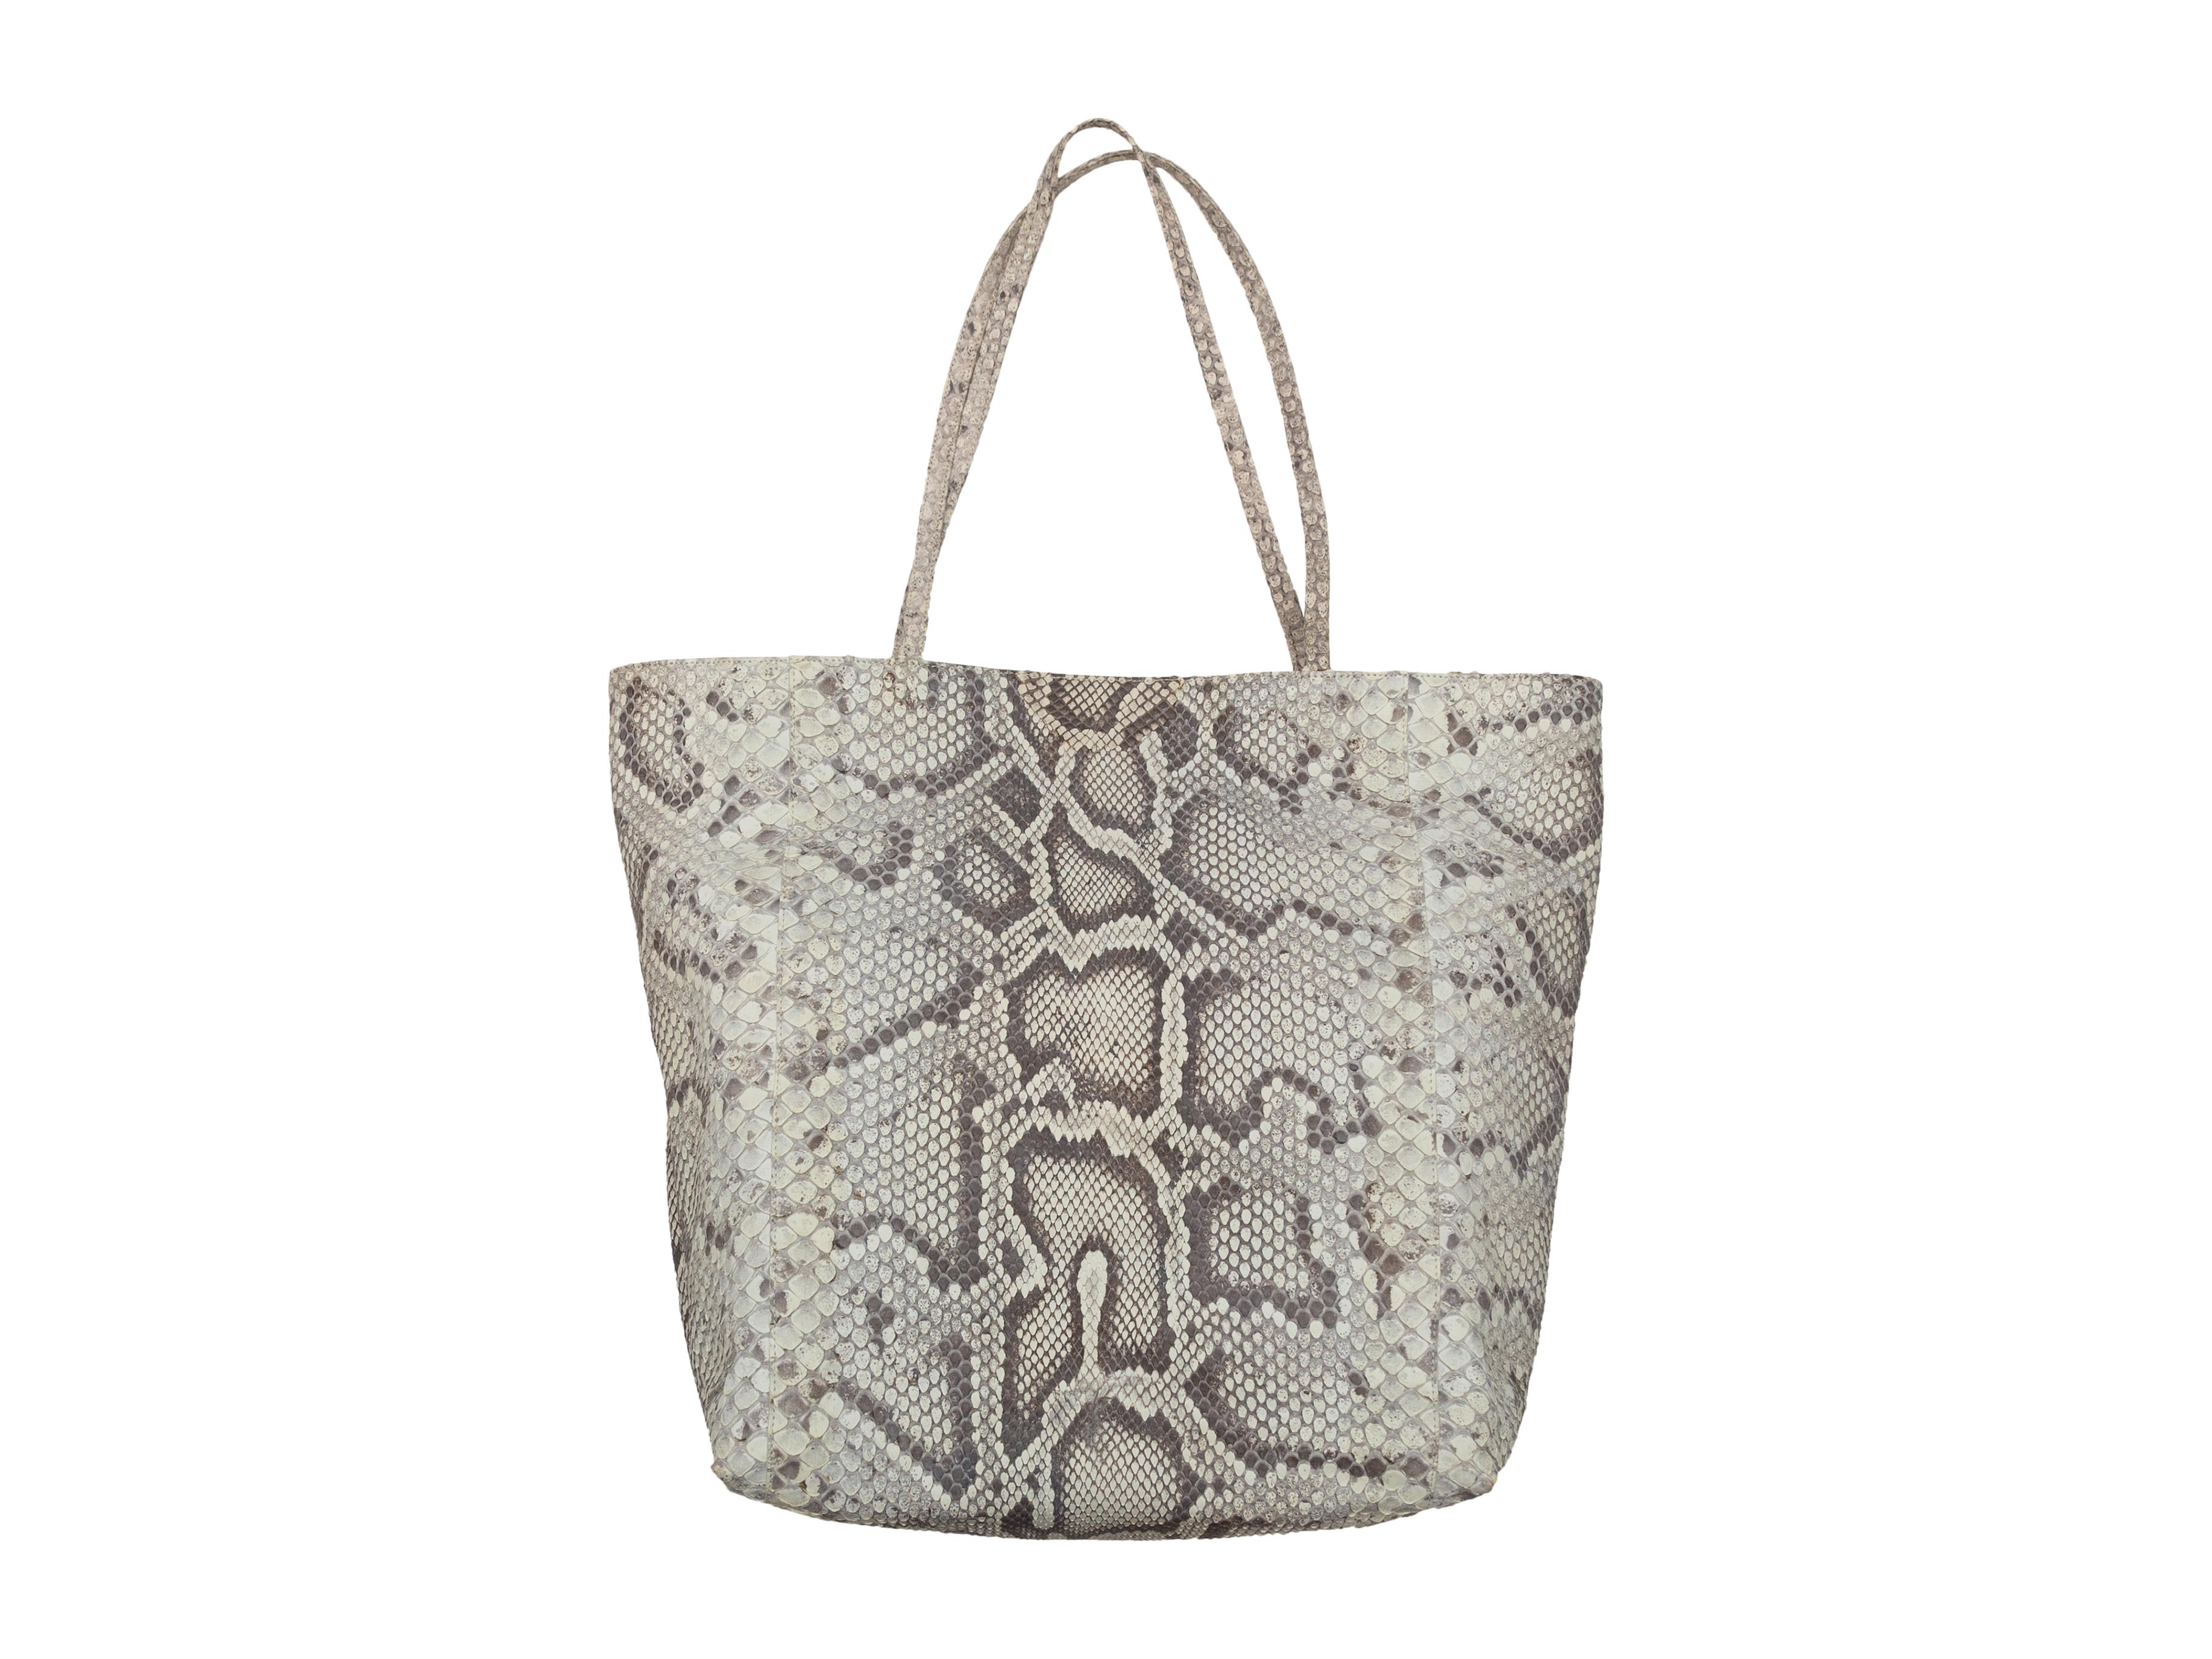 Product details: Grey python skin tote bag by Carlos Falchi. Interior pockets. Dual shoulder straps. 17